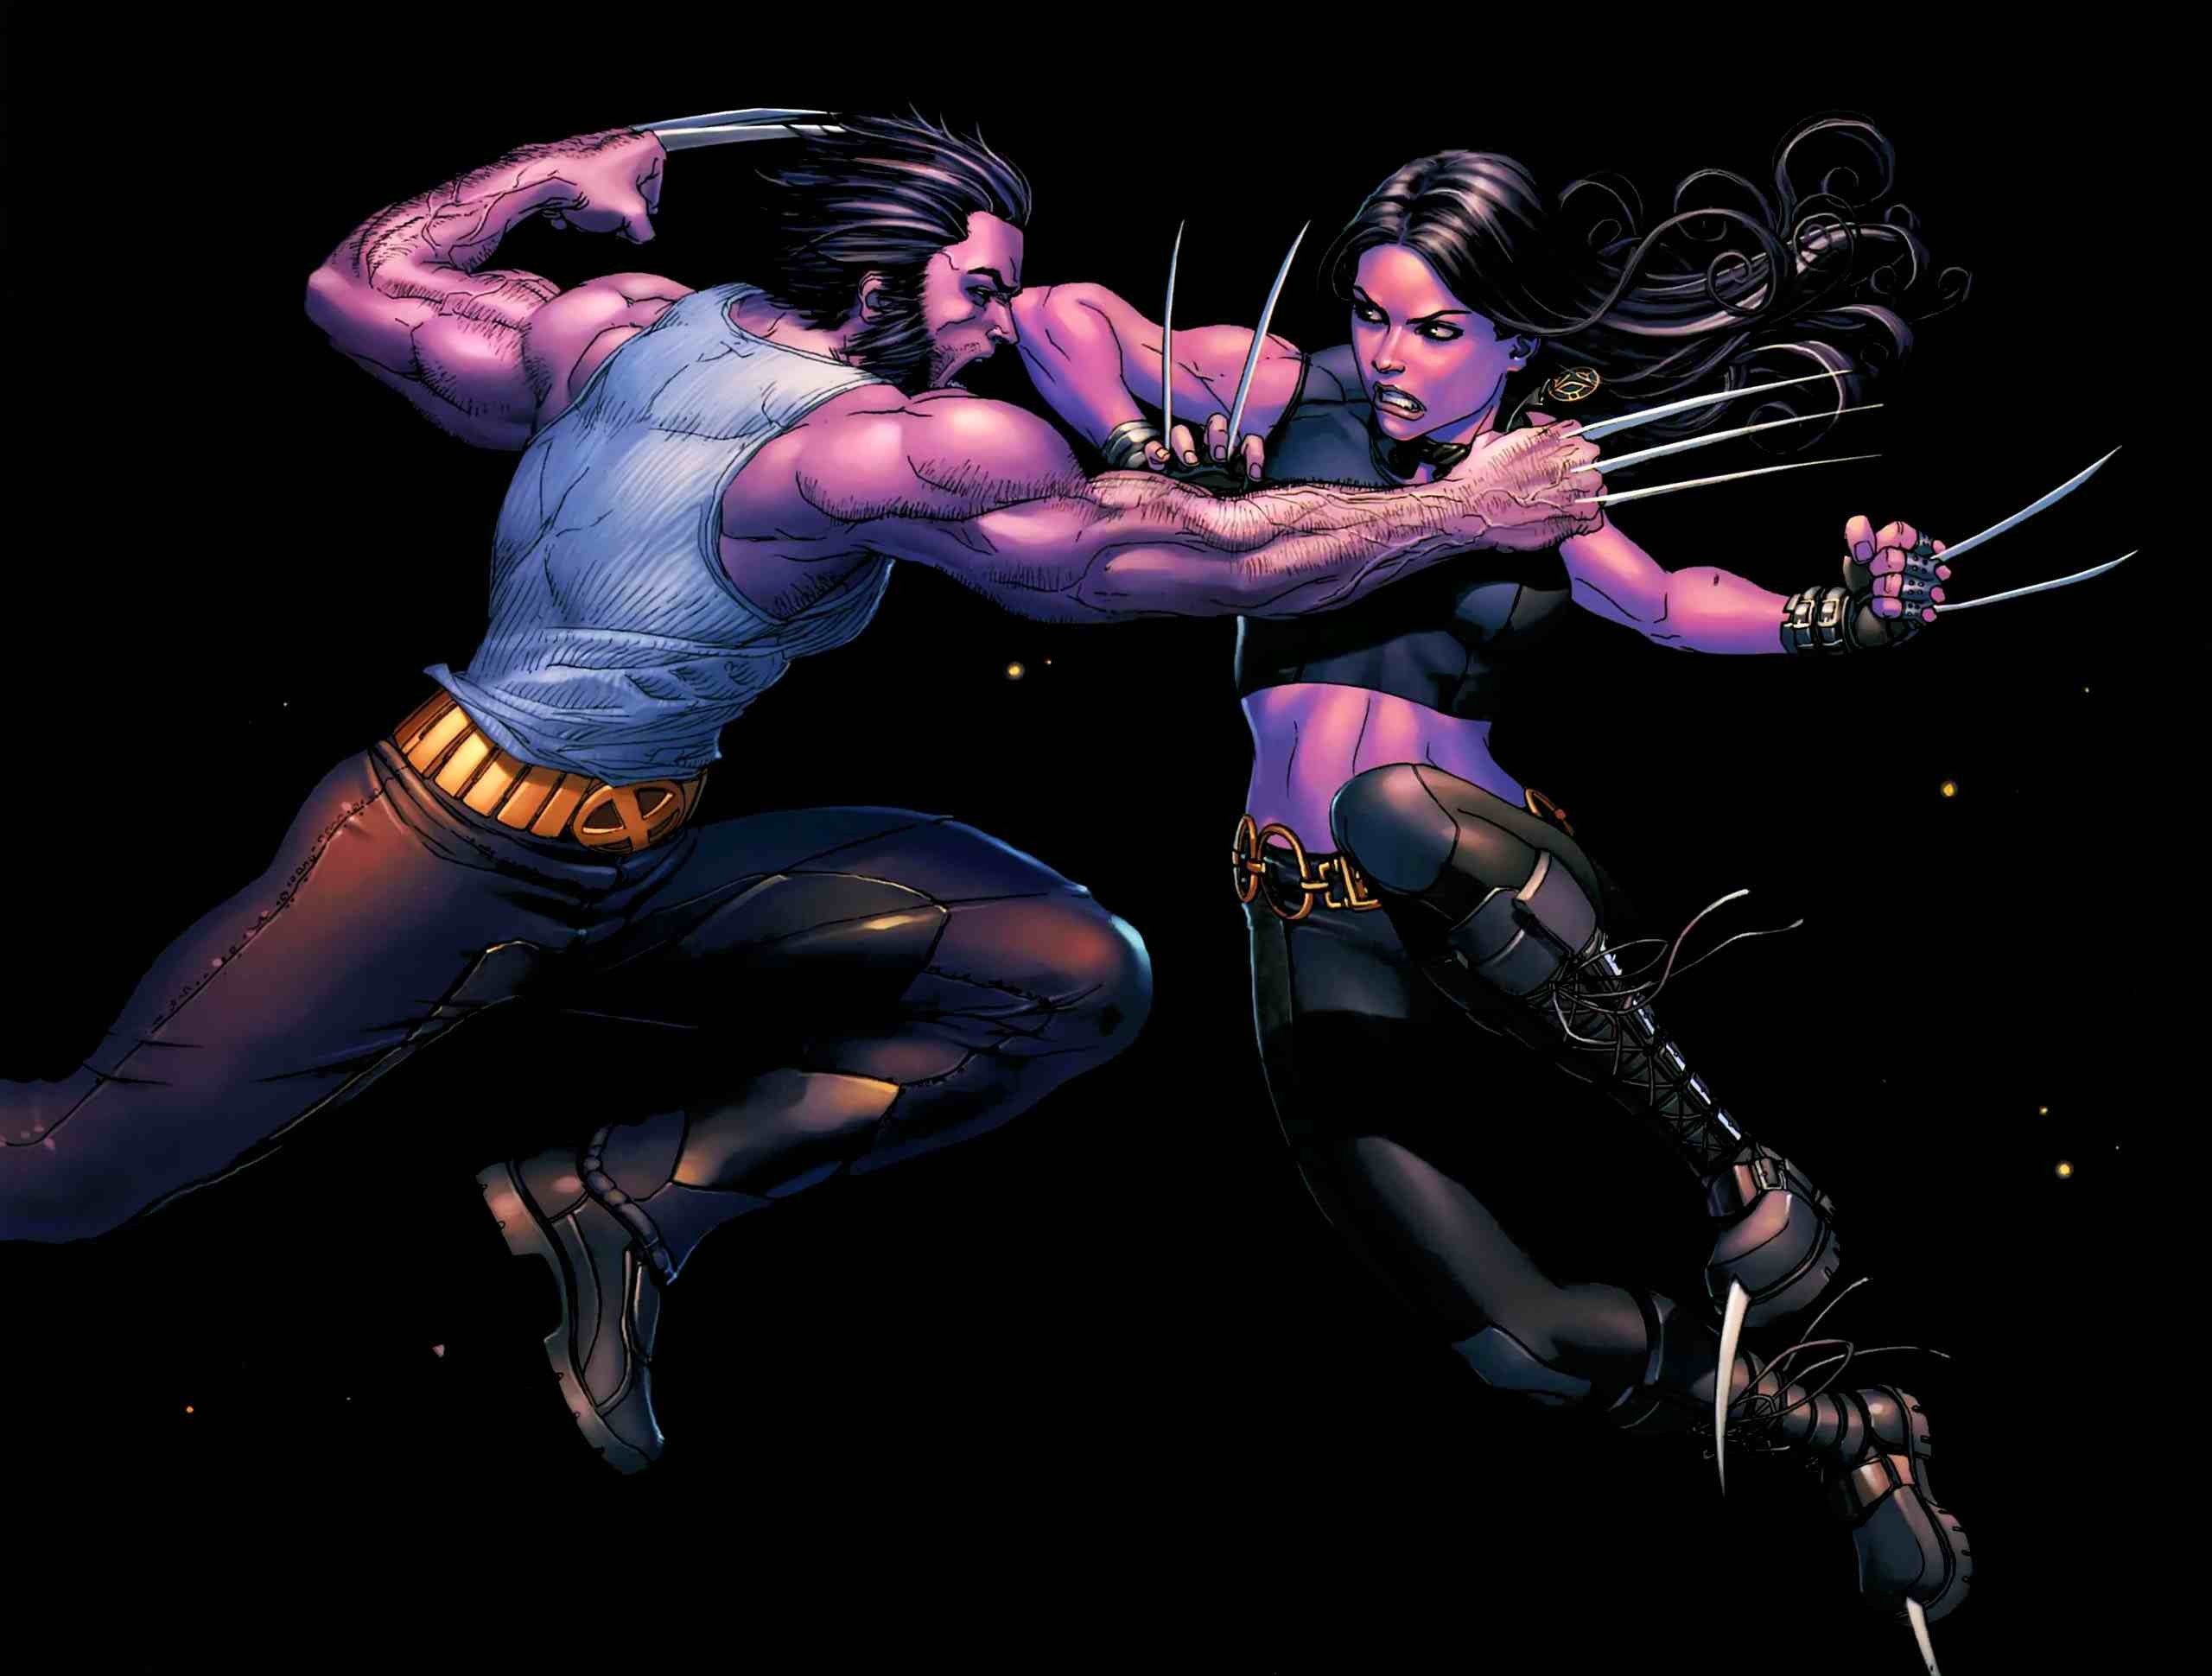 General 2560x1940 X-Men X-23 Wolverine comics women men claws dark hair muscles